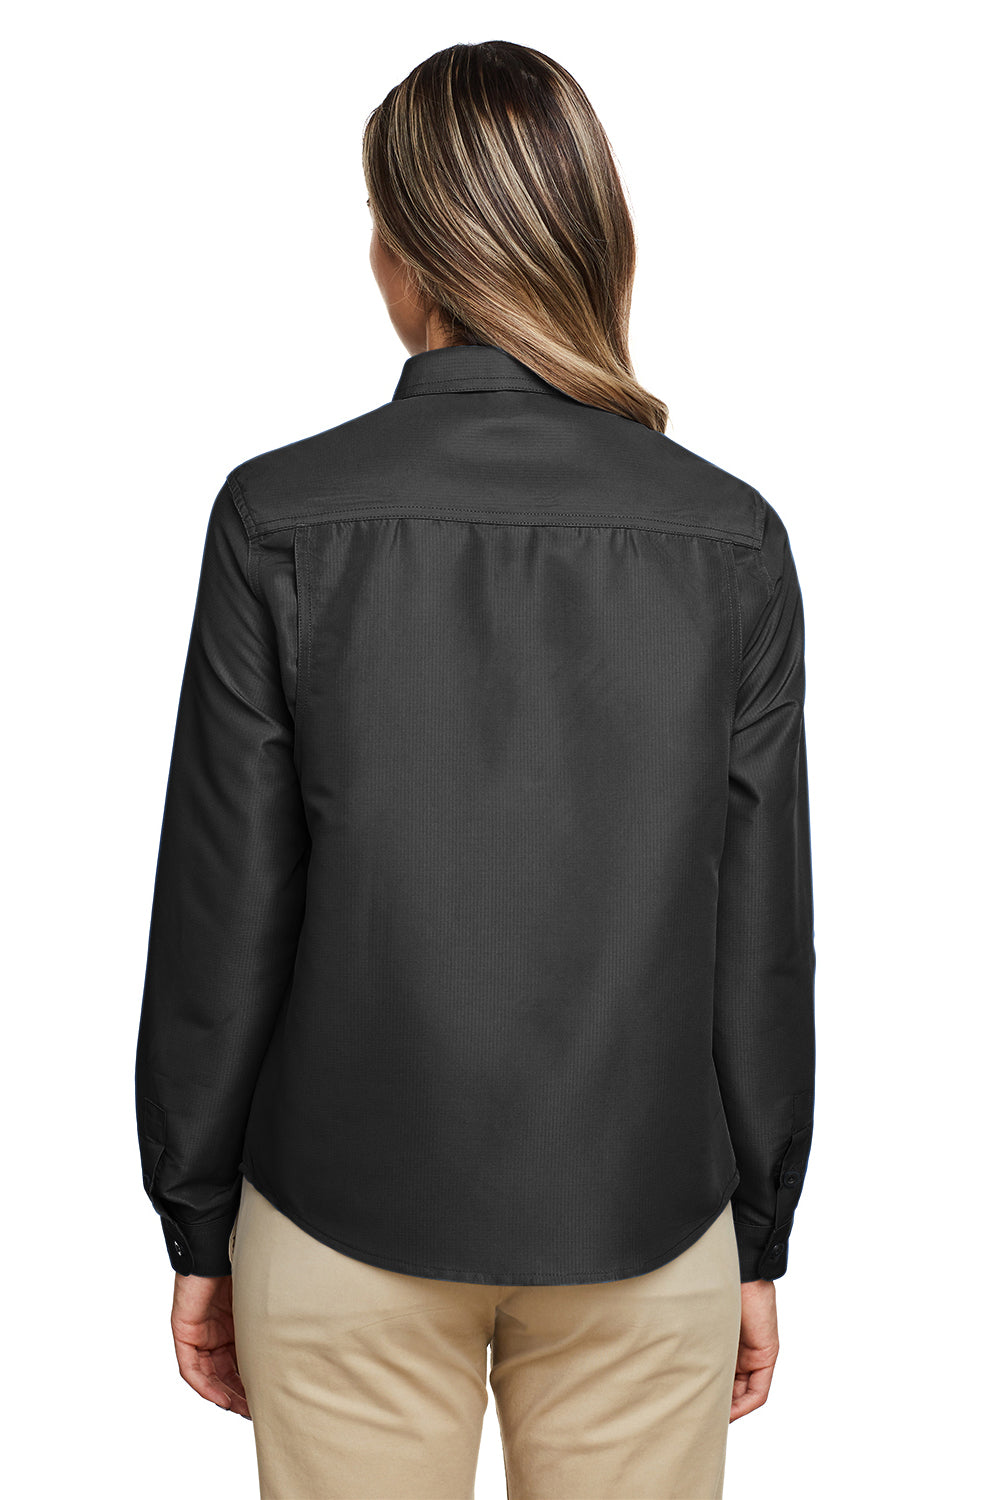 Harriton M580LW Womens Key West Performance Moisture Wicking Long Sleeve Button Down Shirt Charcoal Grey Back